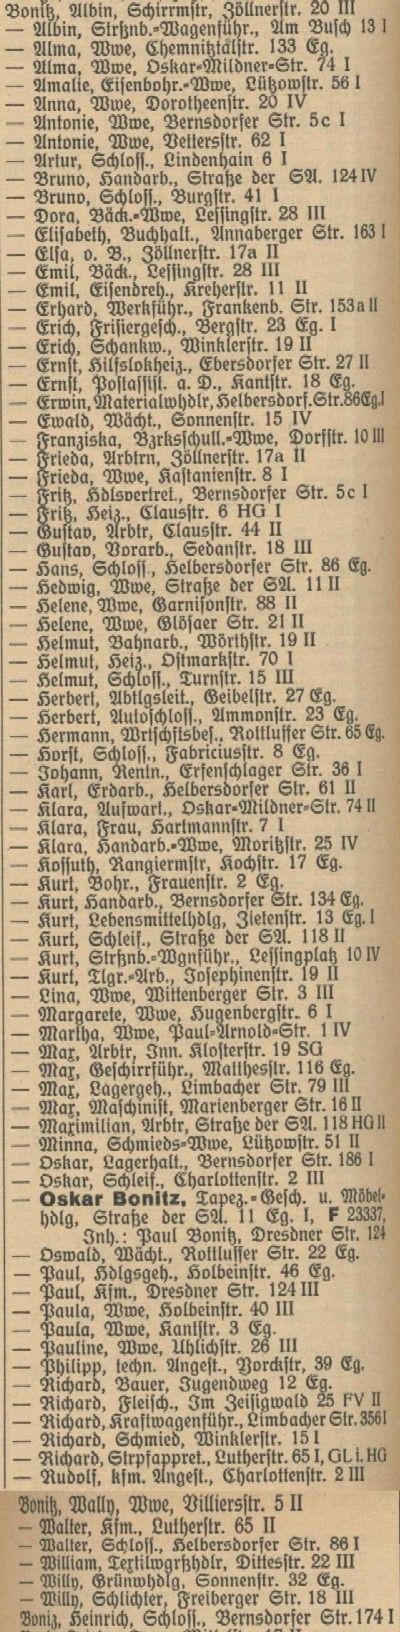 Adressbuch Chemnitz 1943